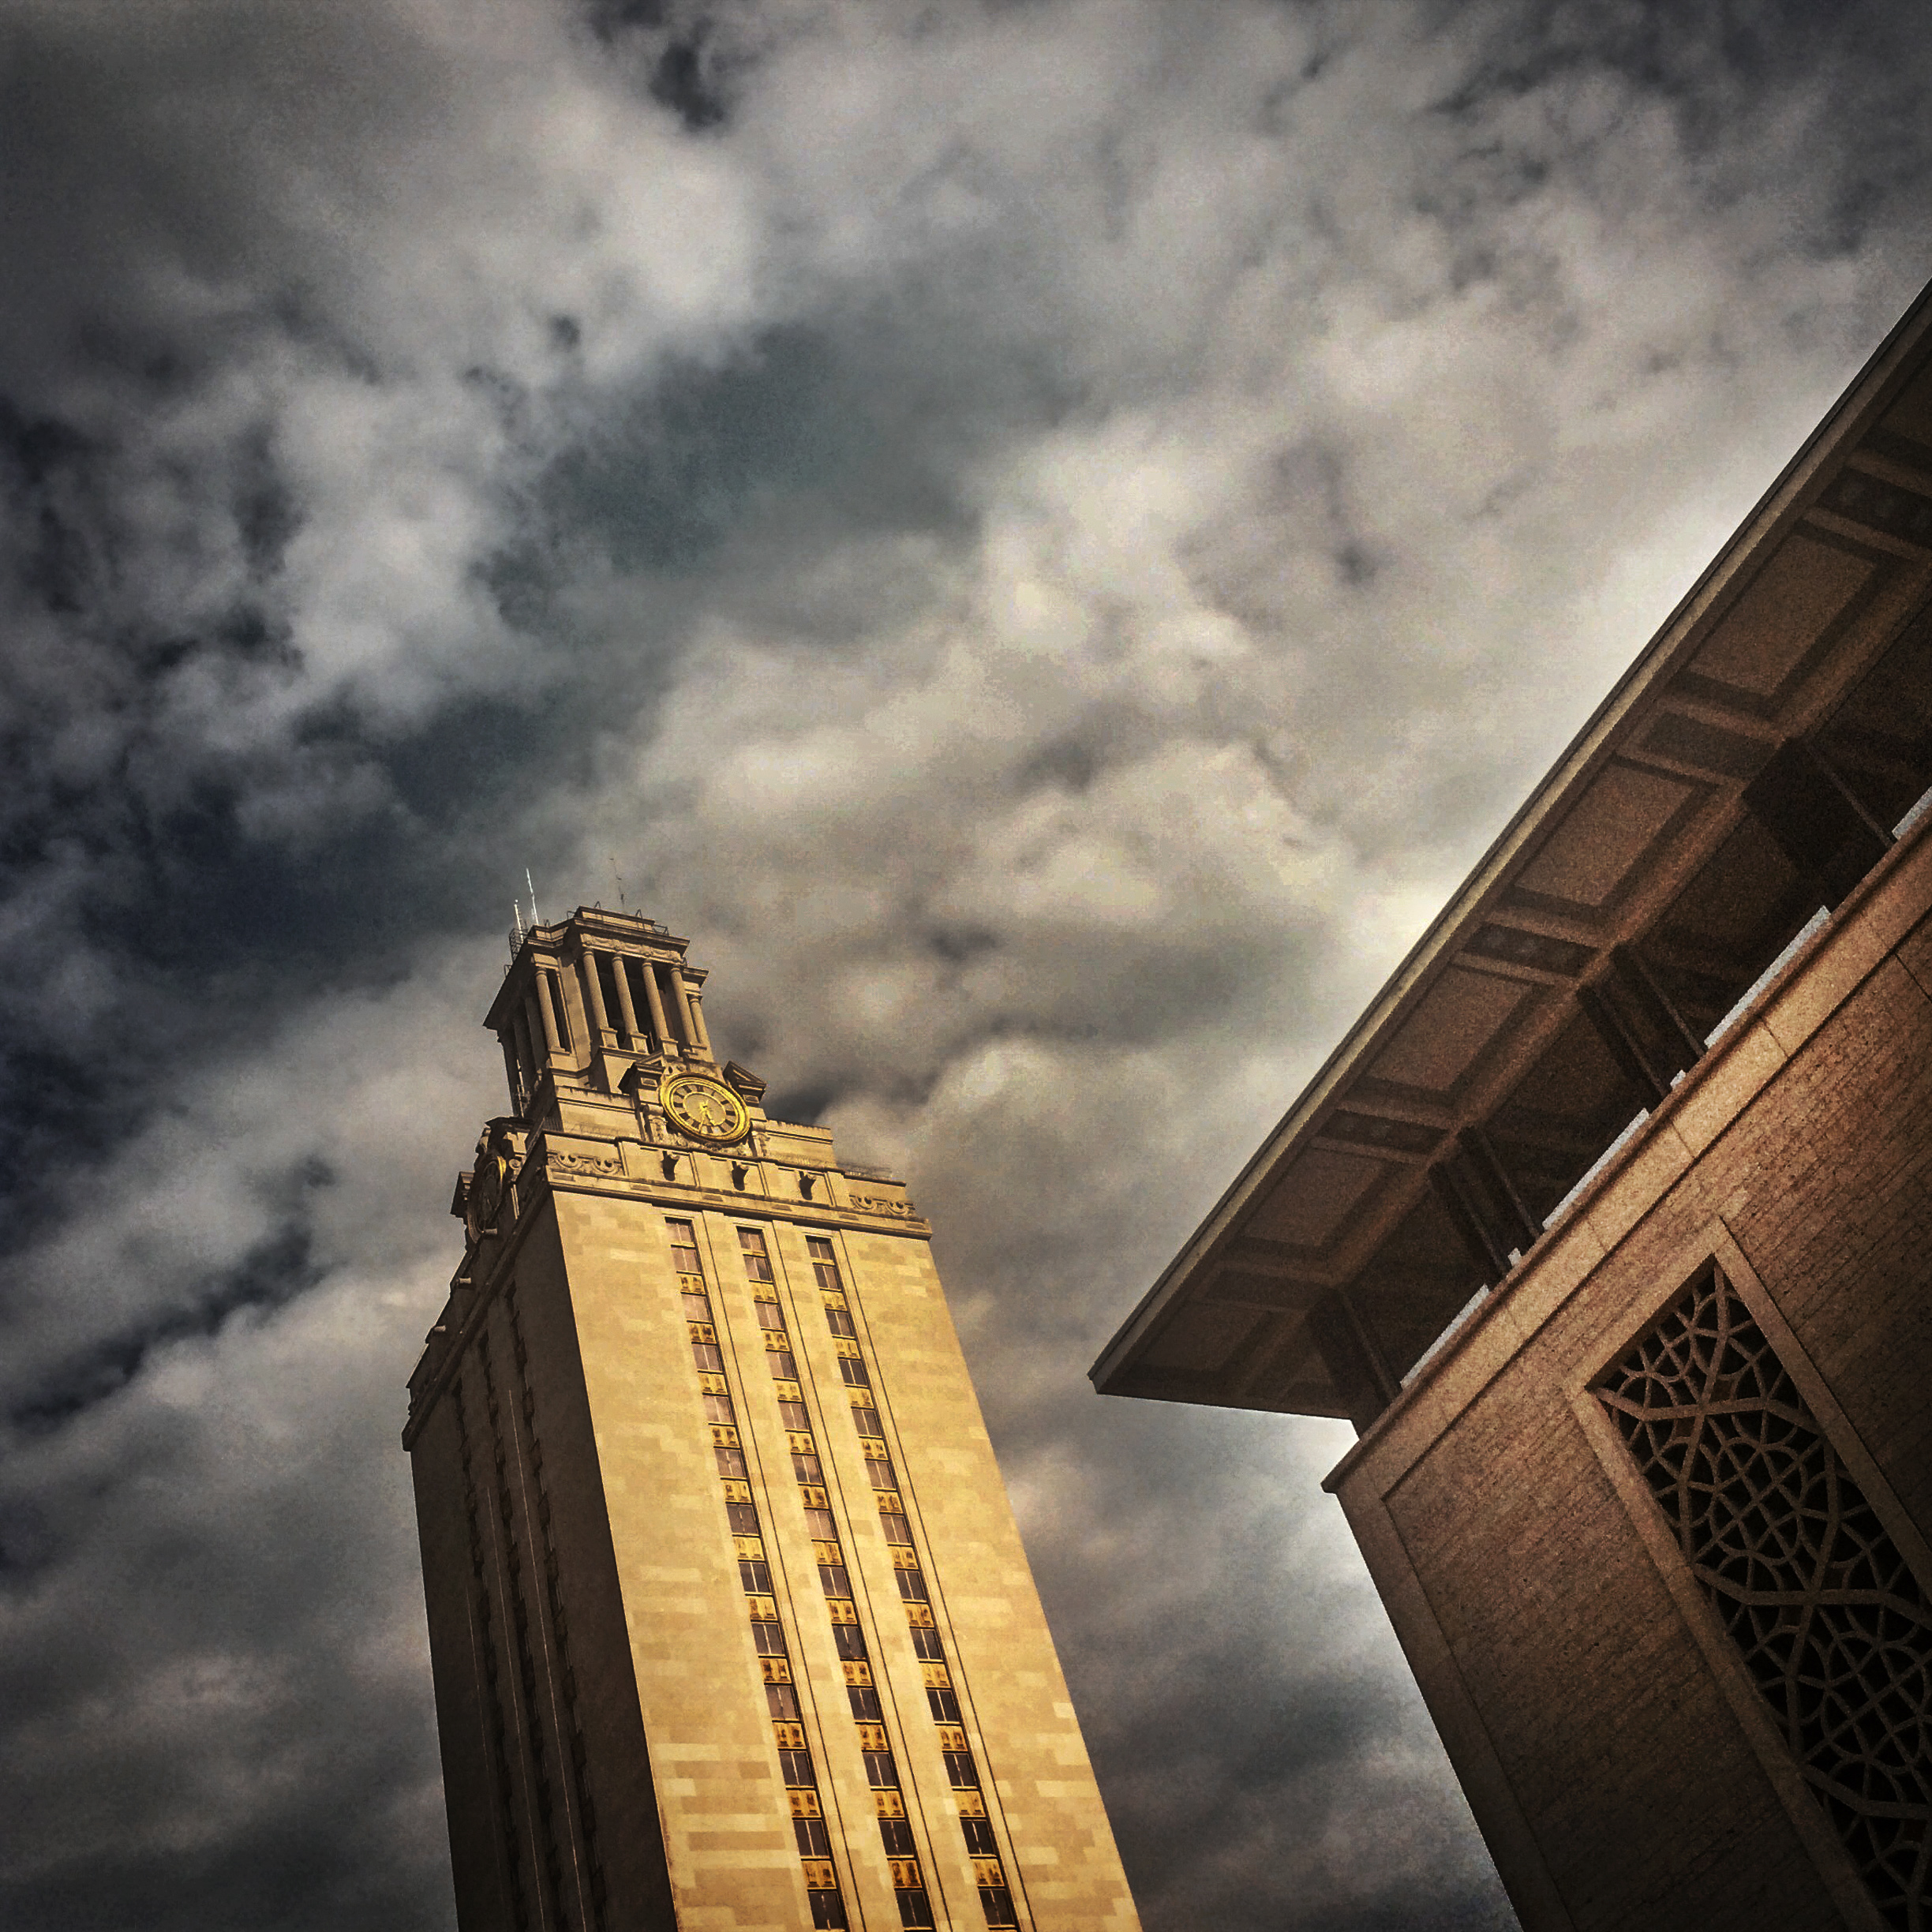 University of Texas Tower, Austin, Texas, 2014